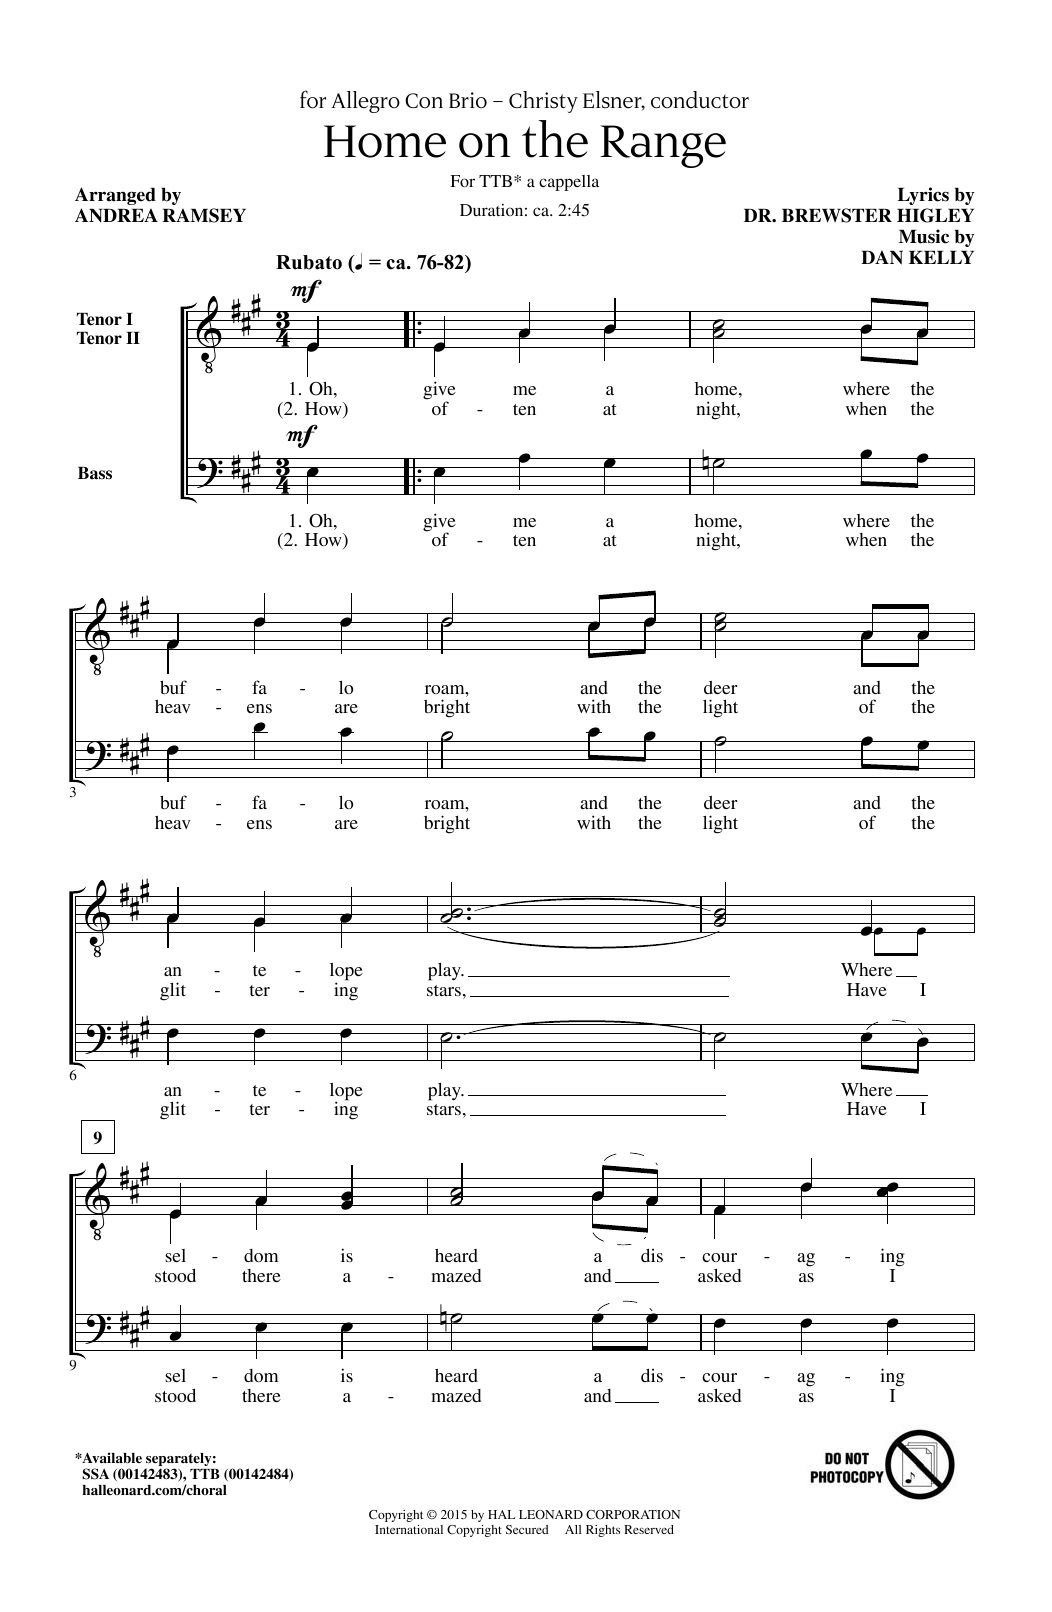 Andrea Ramsey Home On The Range sheet music notes printable PDF score